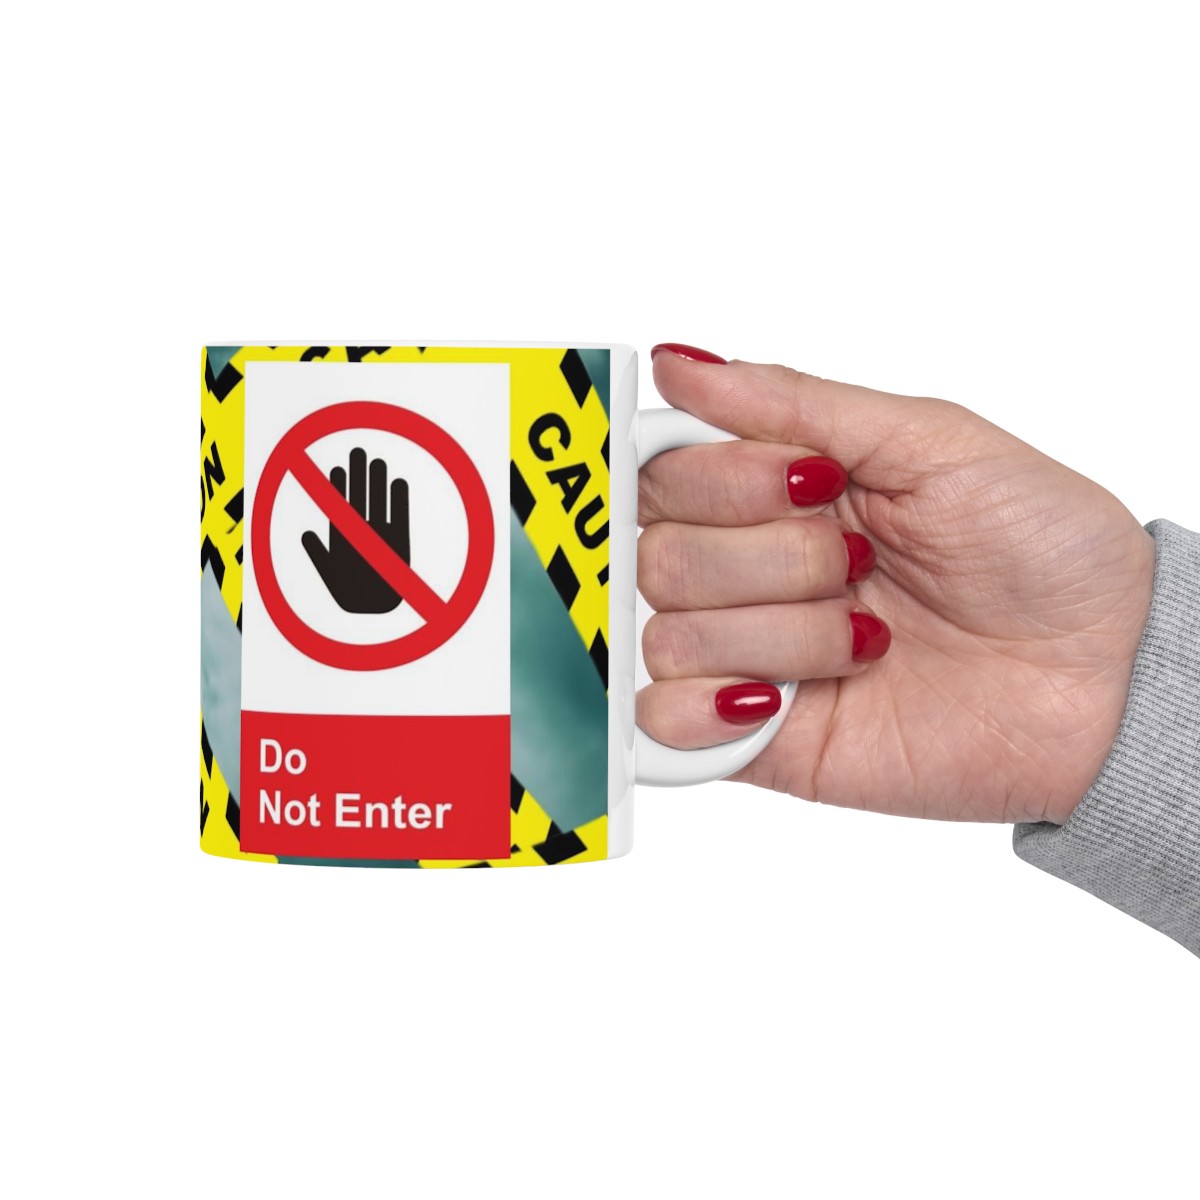 "Do Not Enter" Caution Tape Ceramic Mug 11oz product thumbnail image